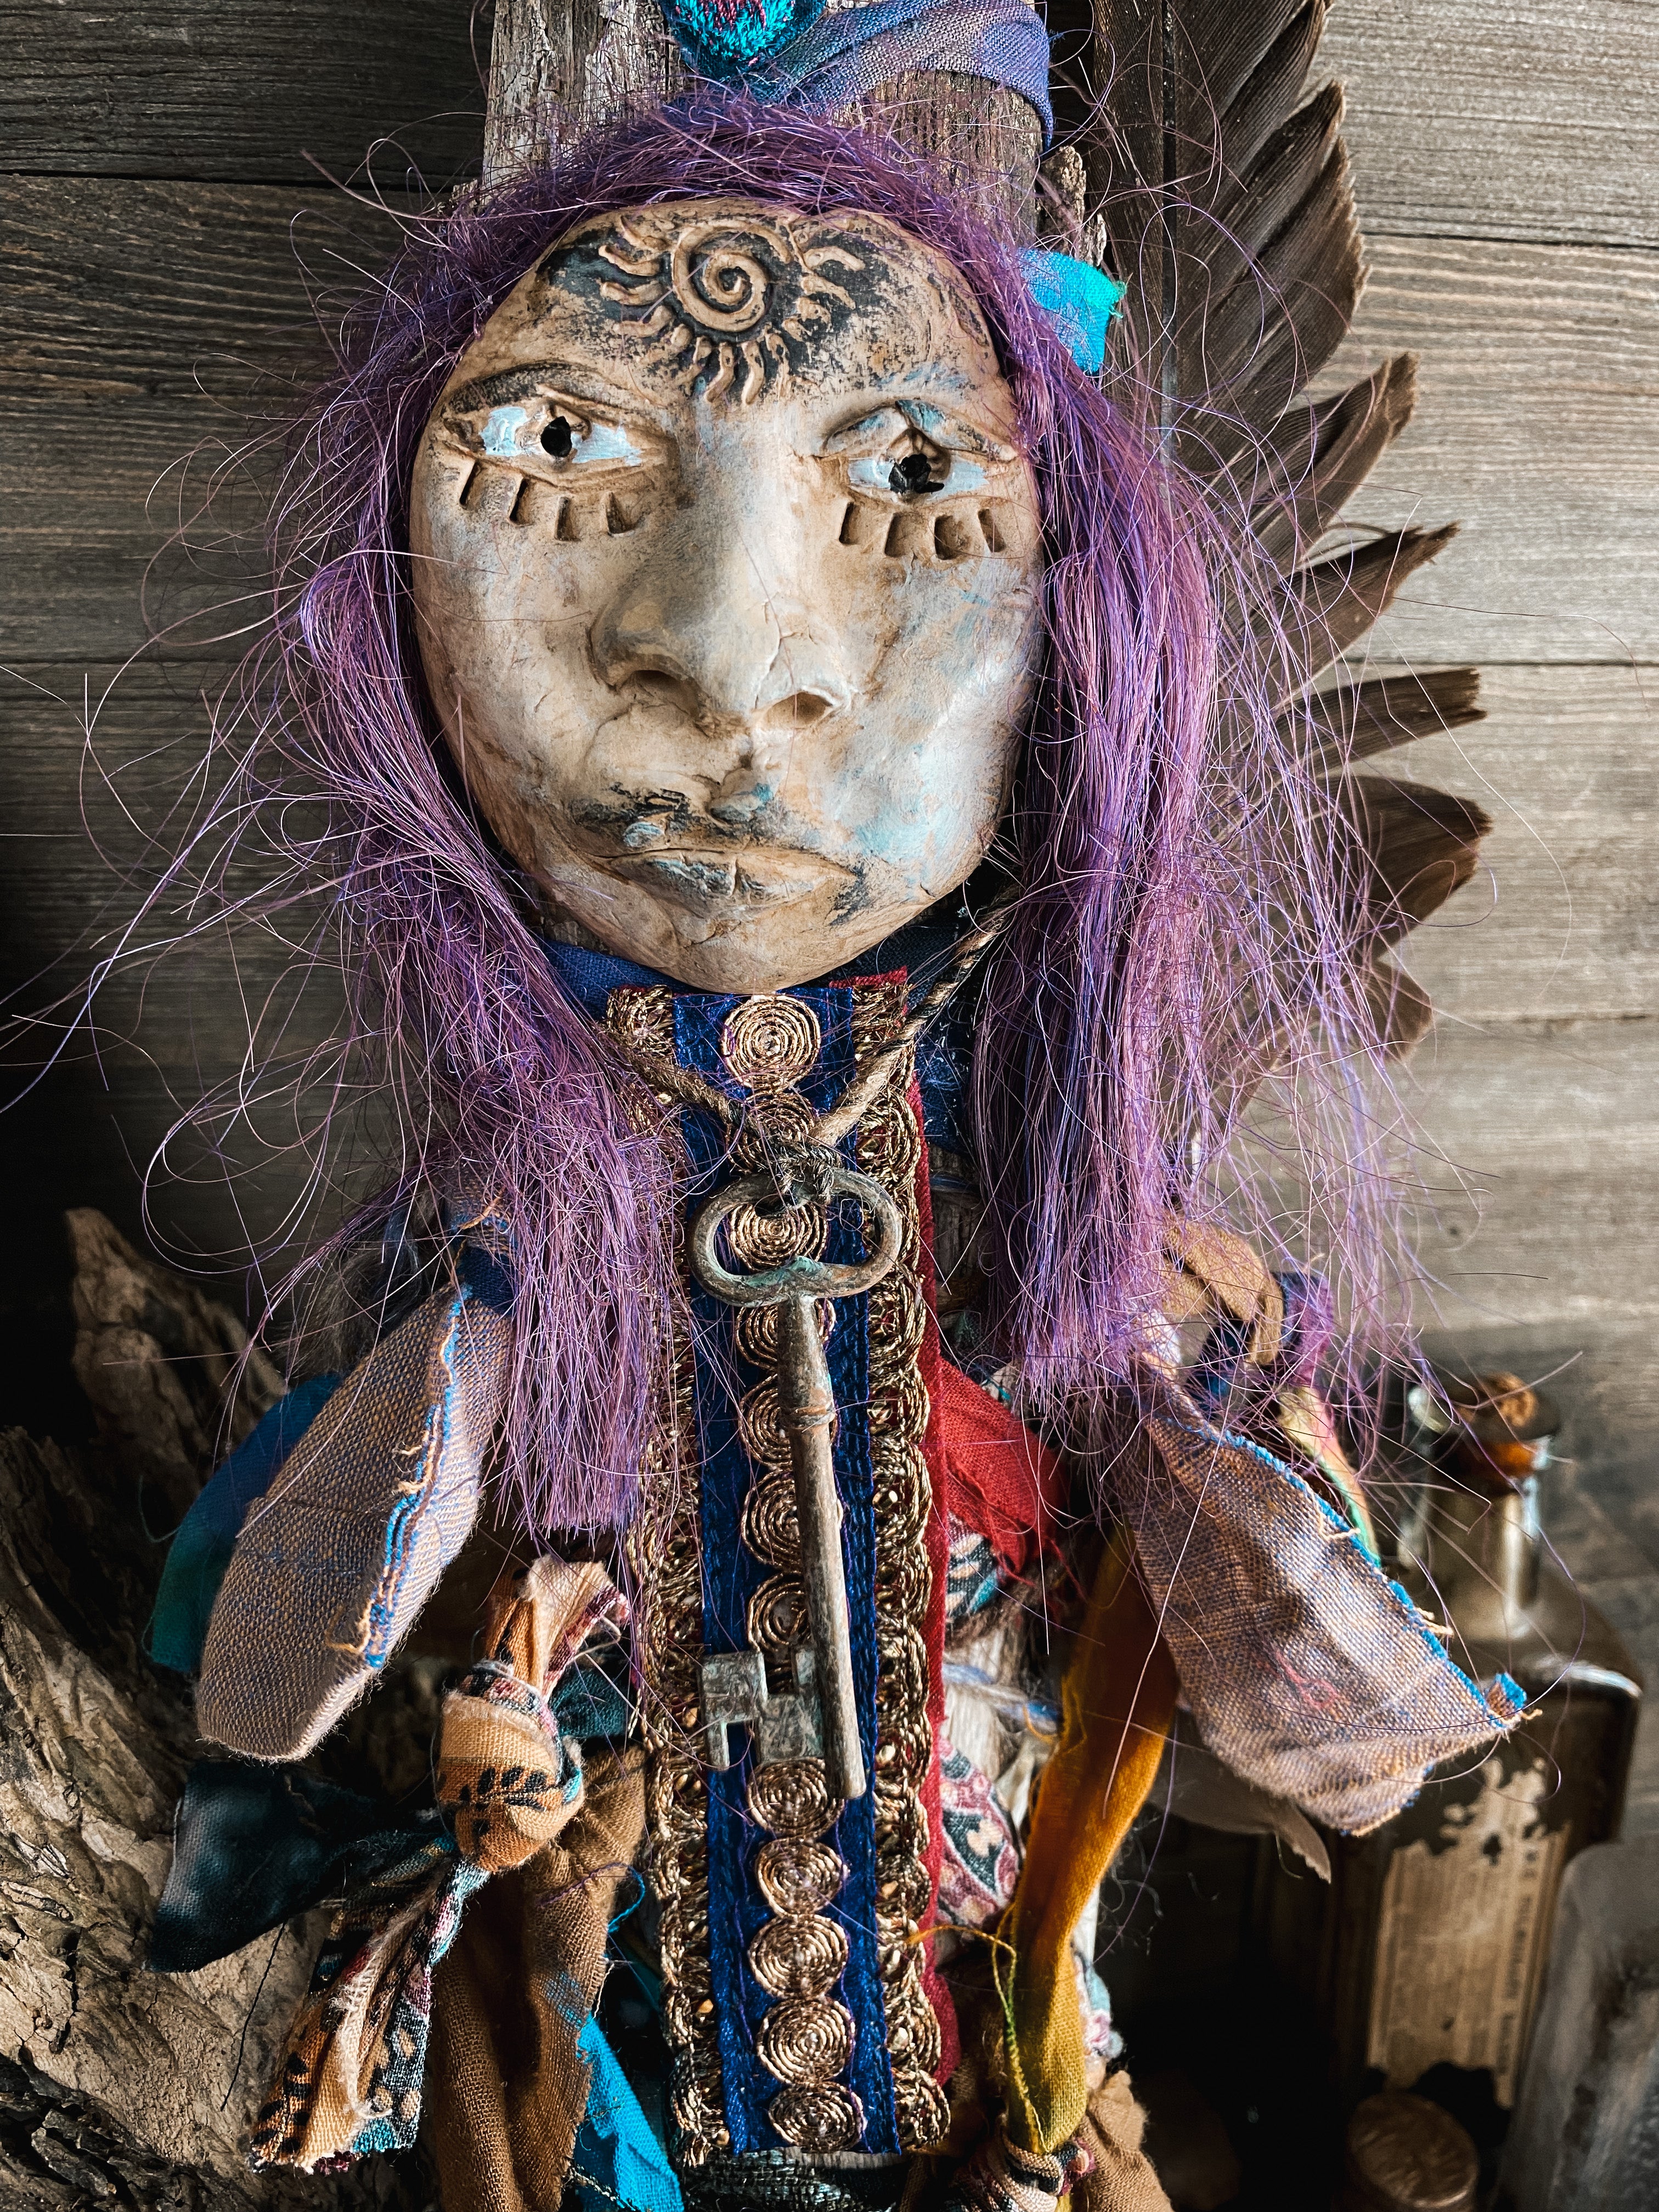 She of the Sacred Feminine - Medicine Doll for Feminine Energy, Passion and Self Love